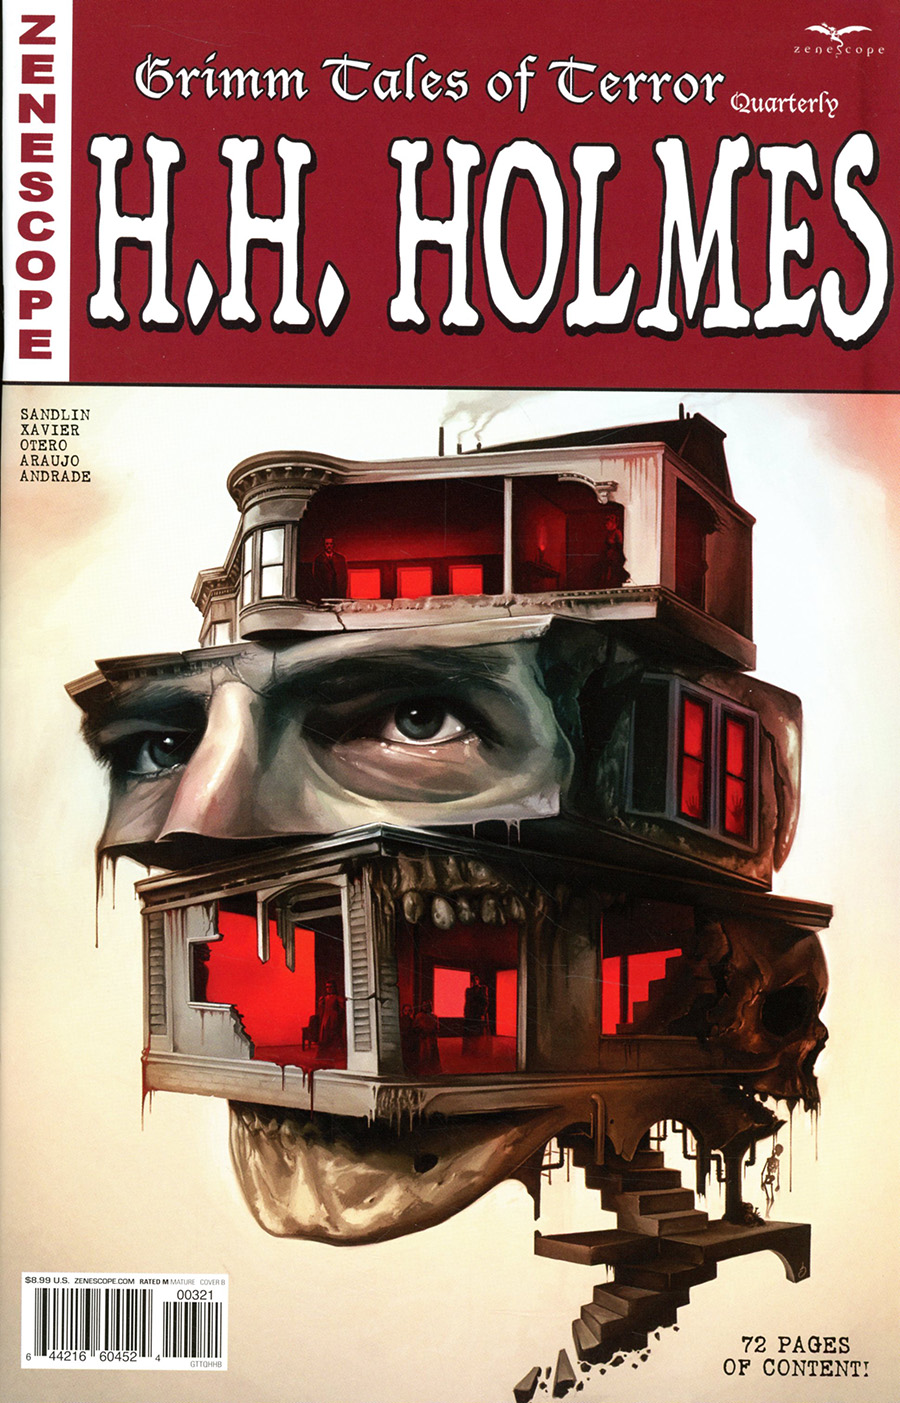 Grimm Fairy Tales Presents Grimm Tales Of Terror Quarterly #3 HH Holmes Cover B David Seidman